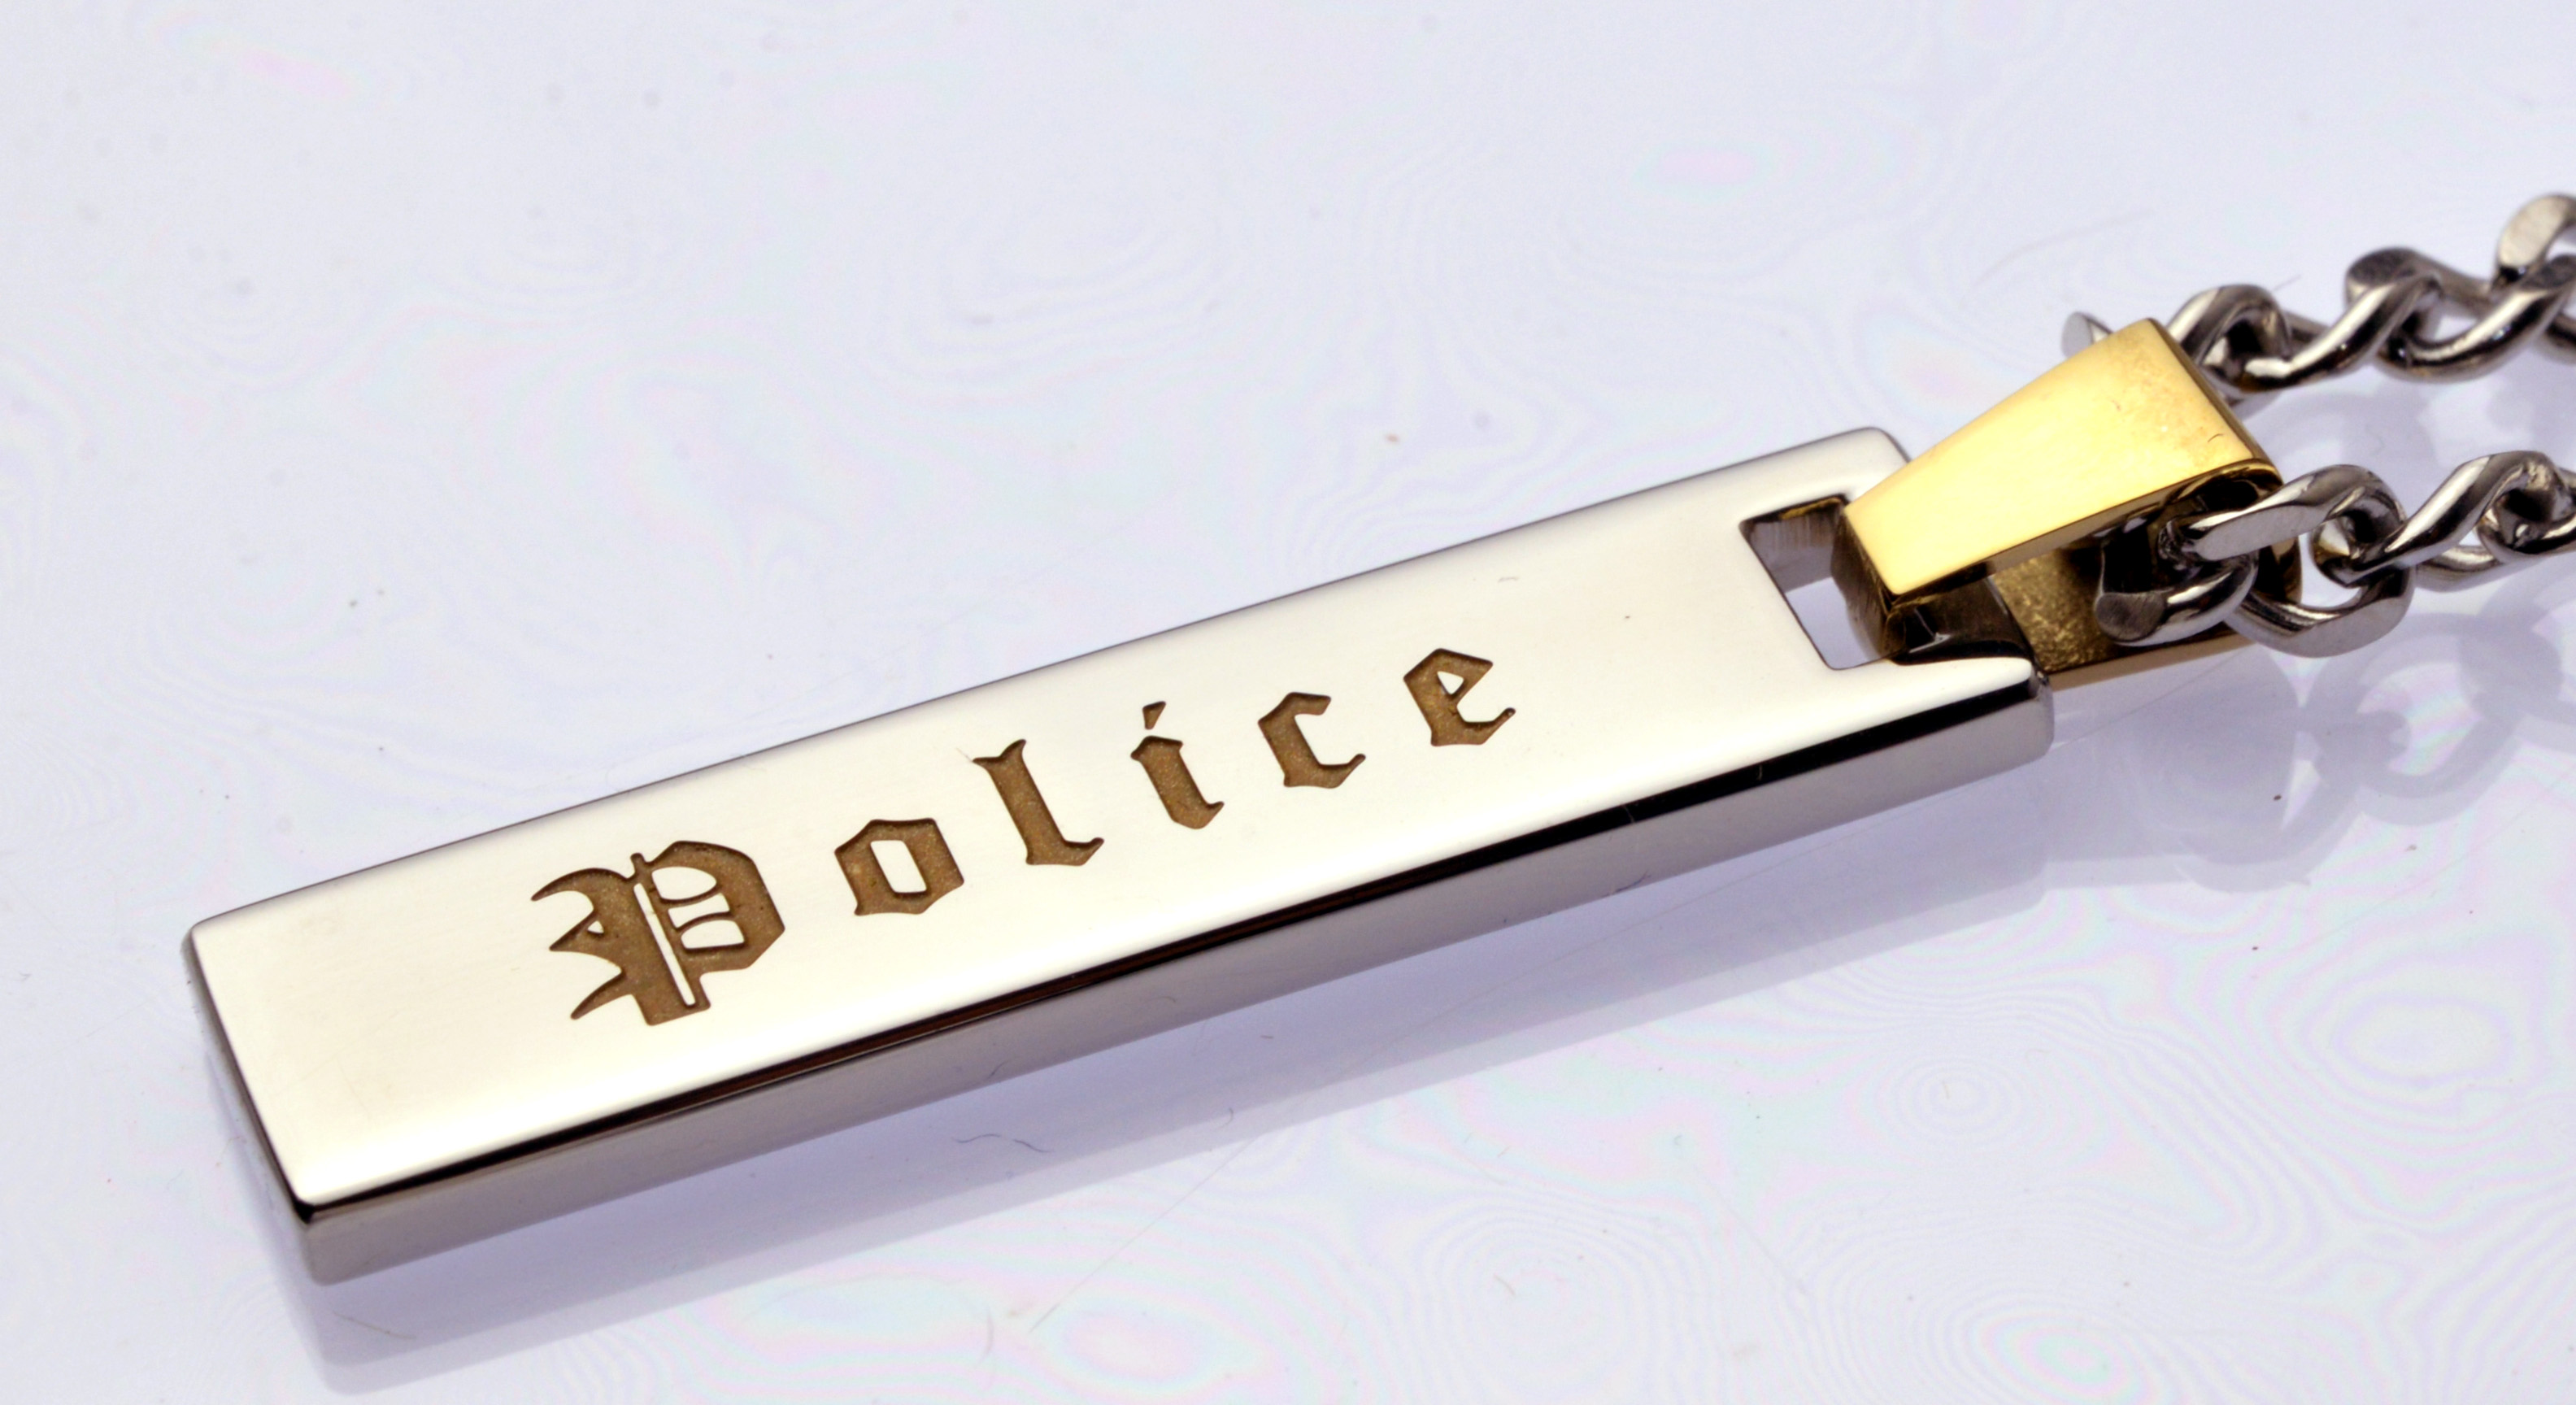 http://www.police.ne.jp/images/Police_necklace_vertical-02.jpg